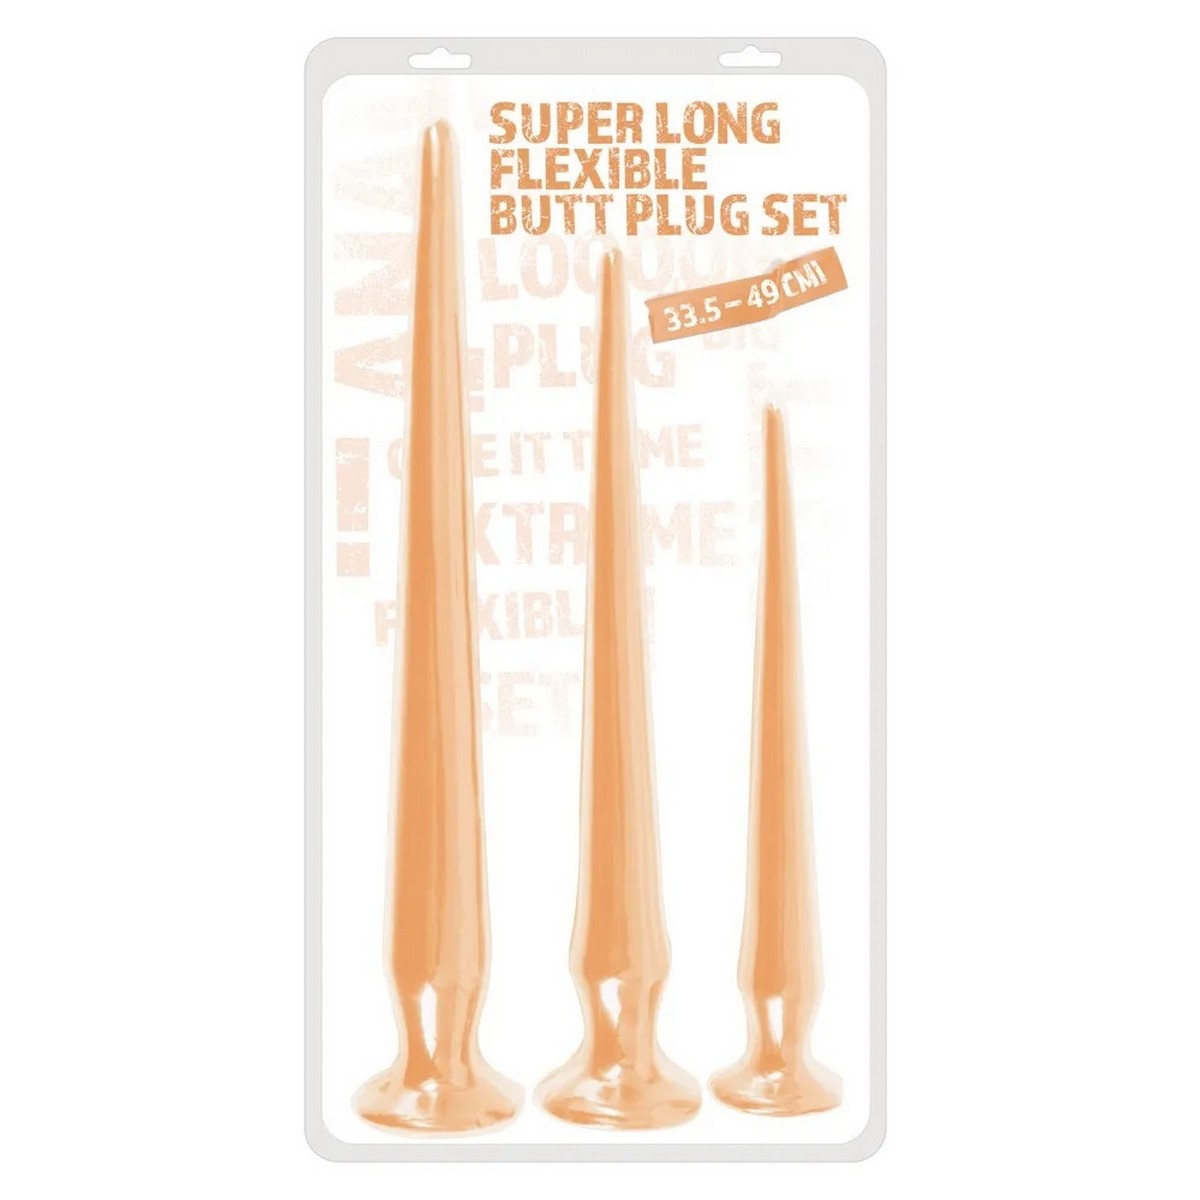     Super Long Flexible Butt Plug Set ()